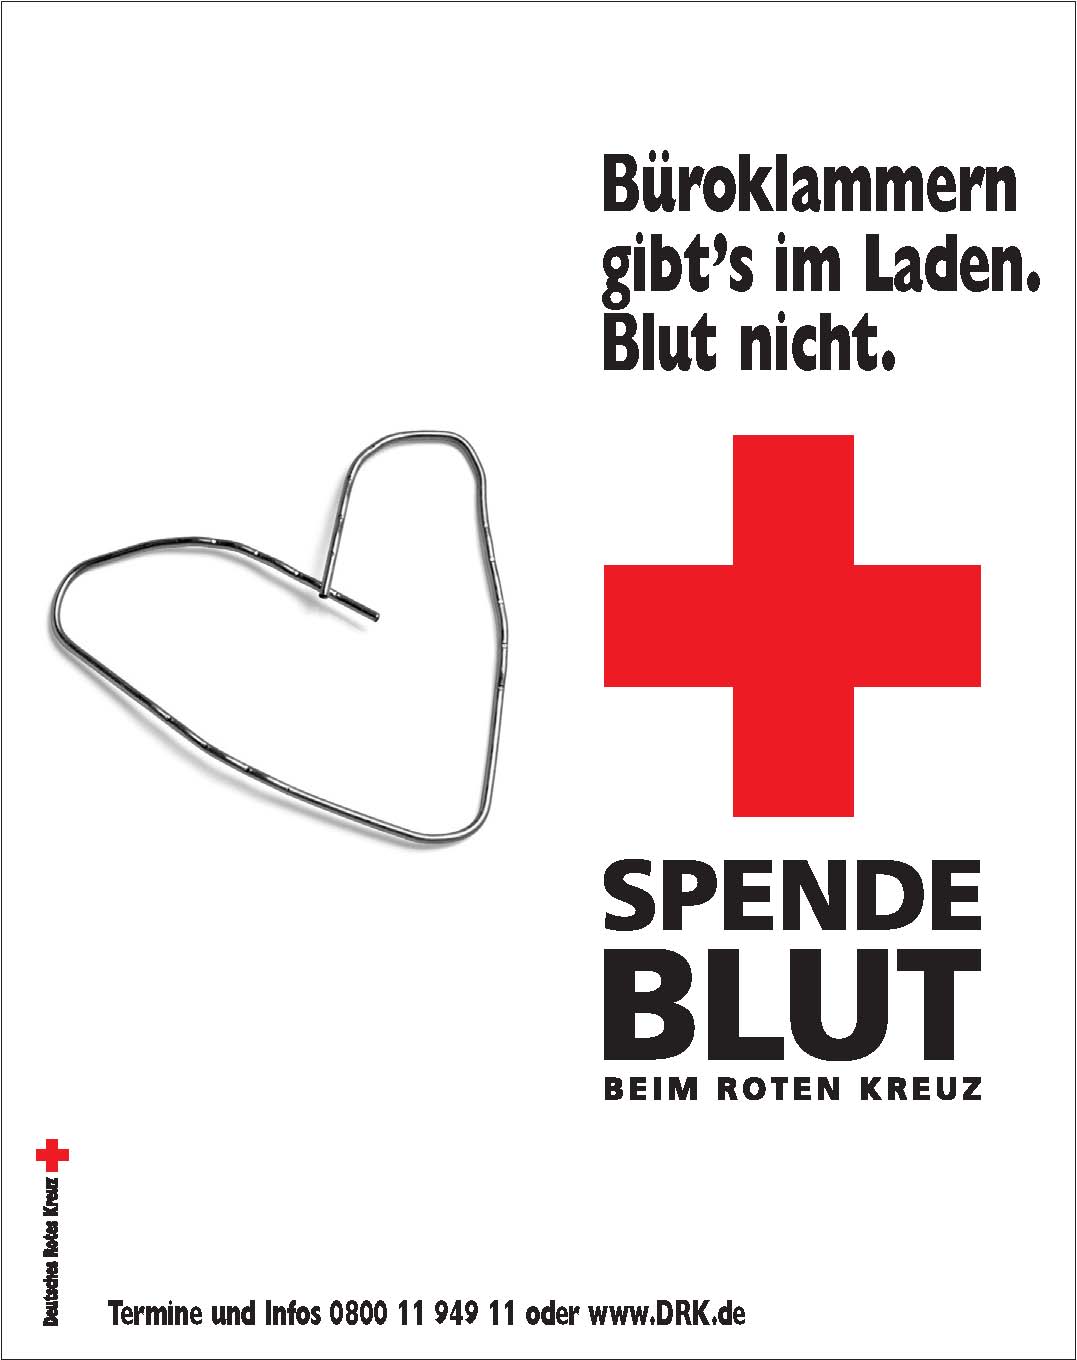 Quelle: DRK Blutspendedienst (www.blutspende.de)